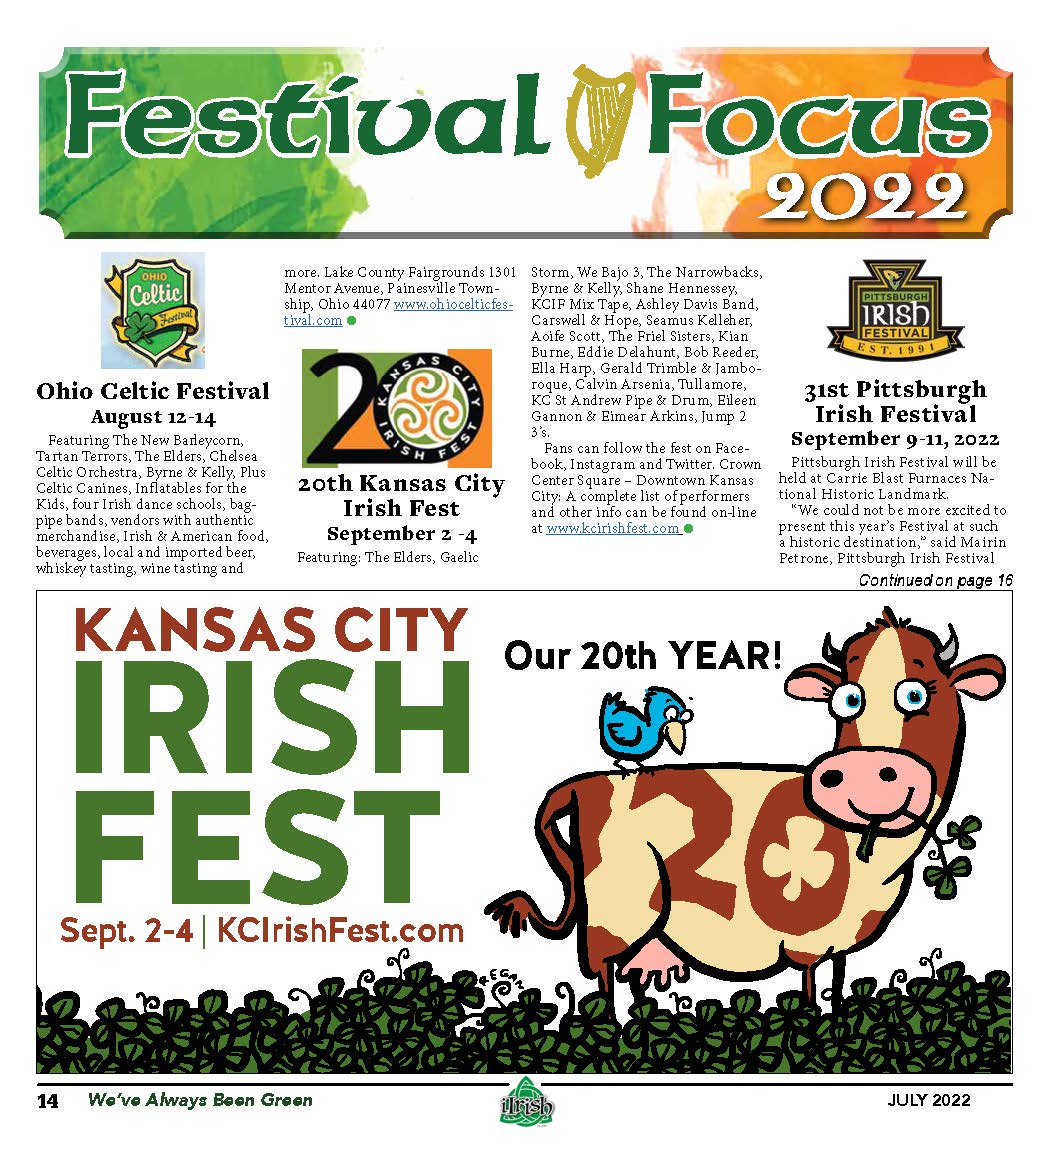 Festival Focus Info